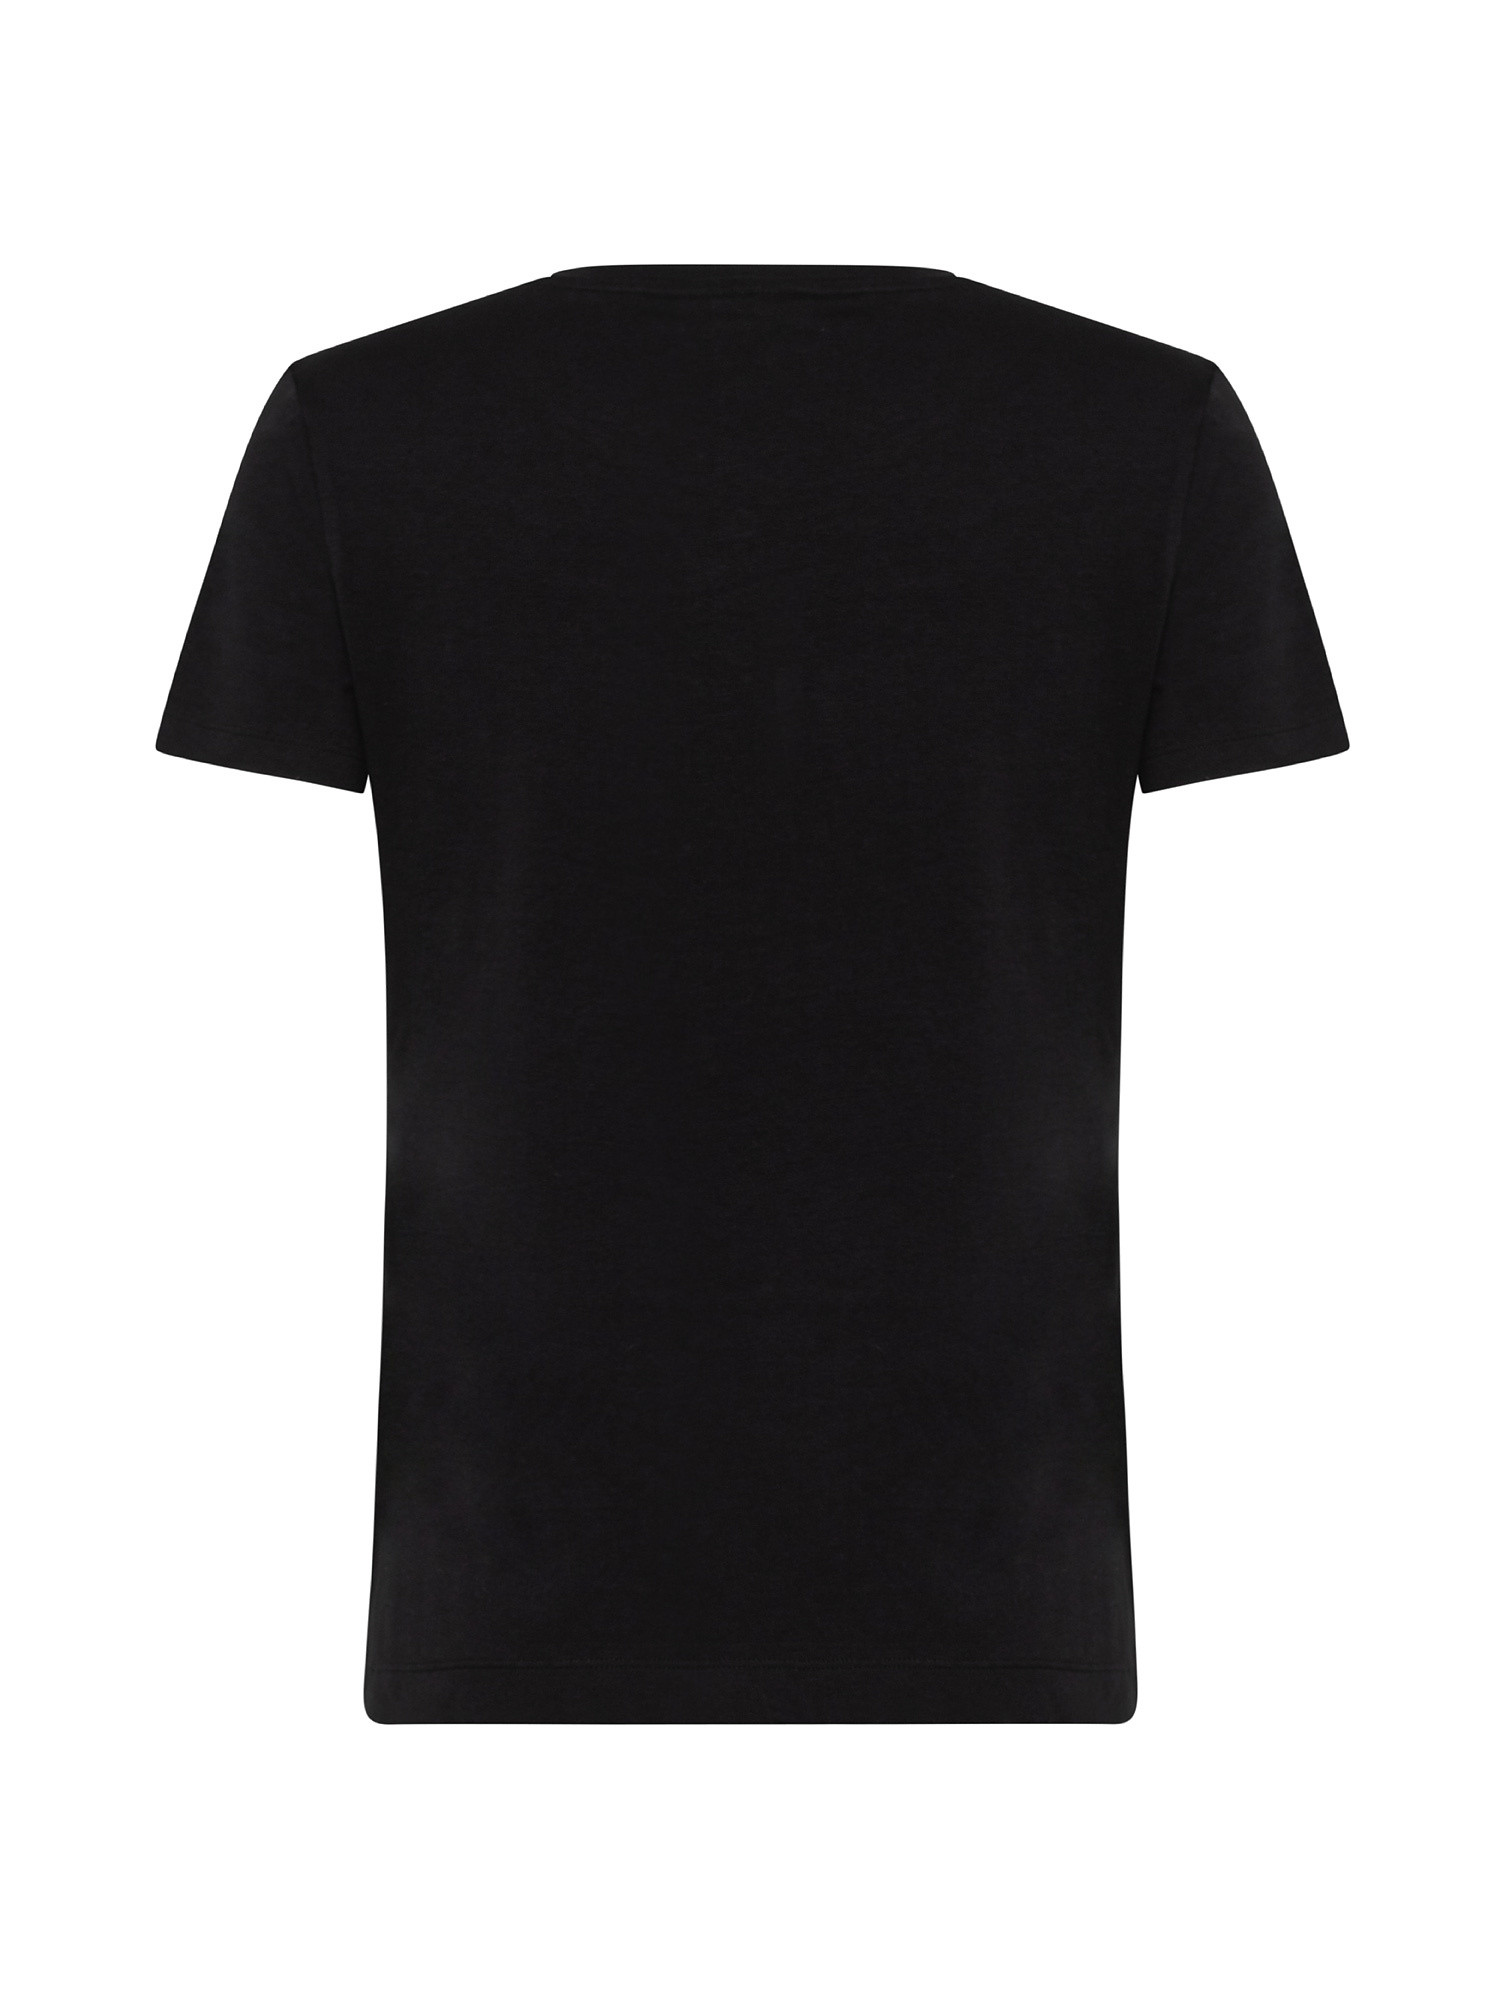 T-shirt con logo palma, Nero, large image number 1